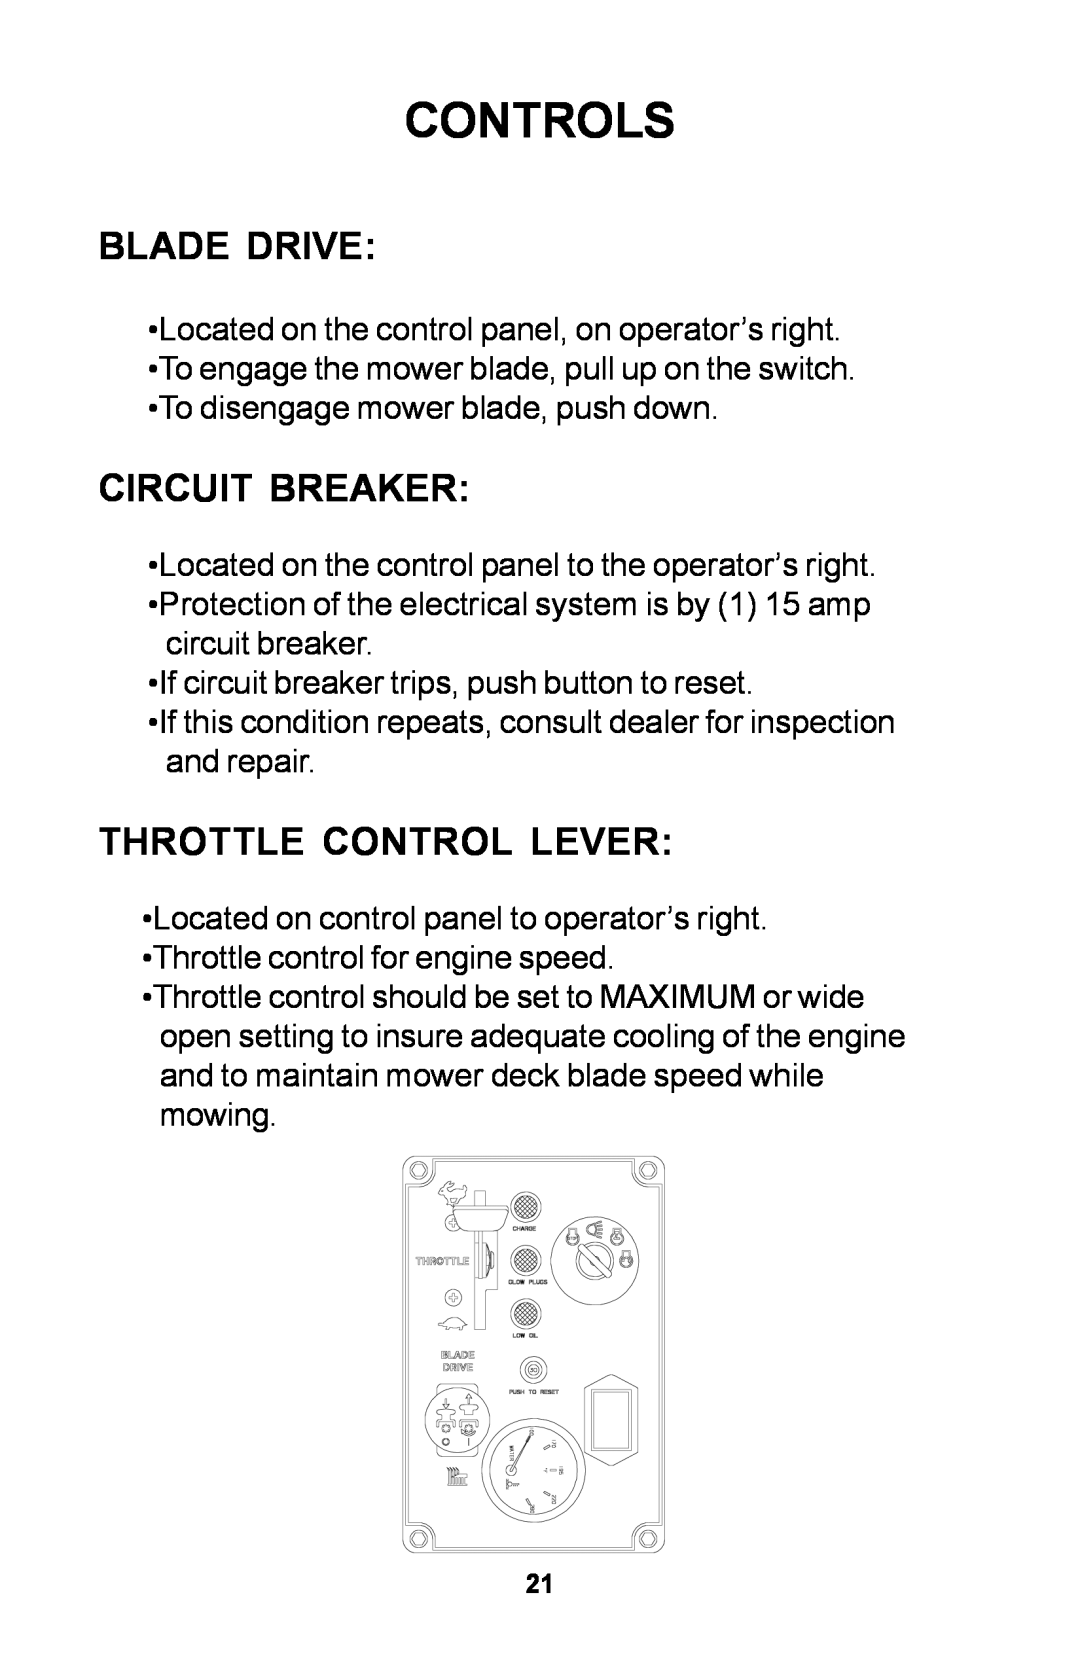 Dixon ZTR manual Blade Drive, Circuit Breaker, Throttle Control Lever, Controls 